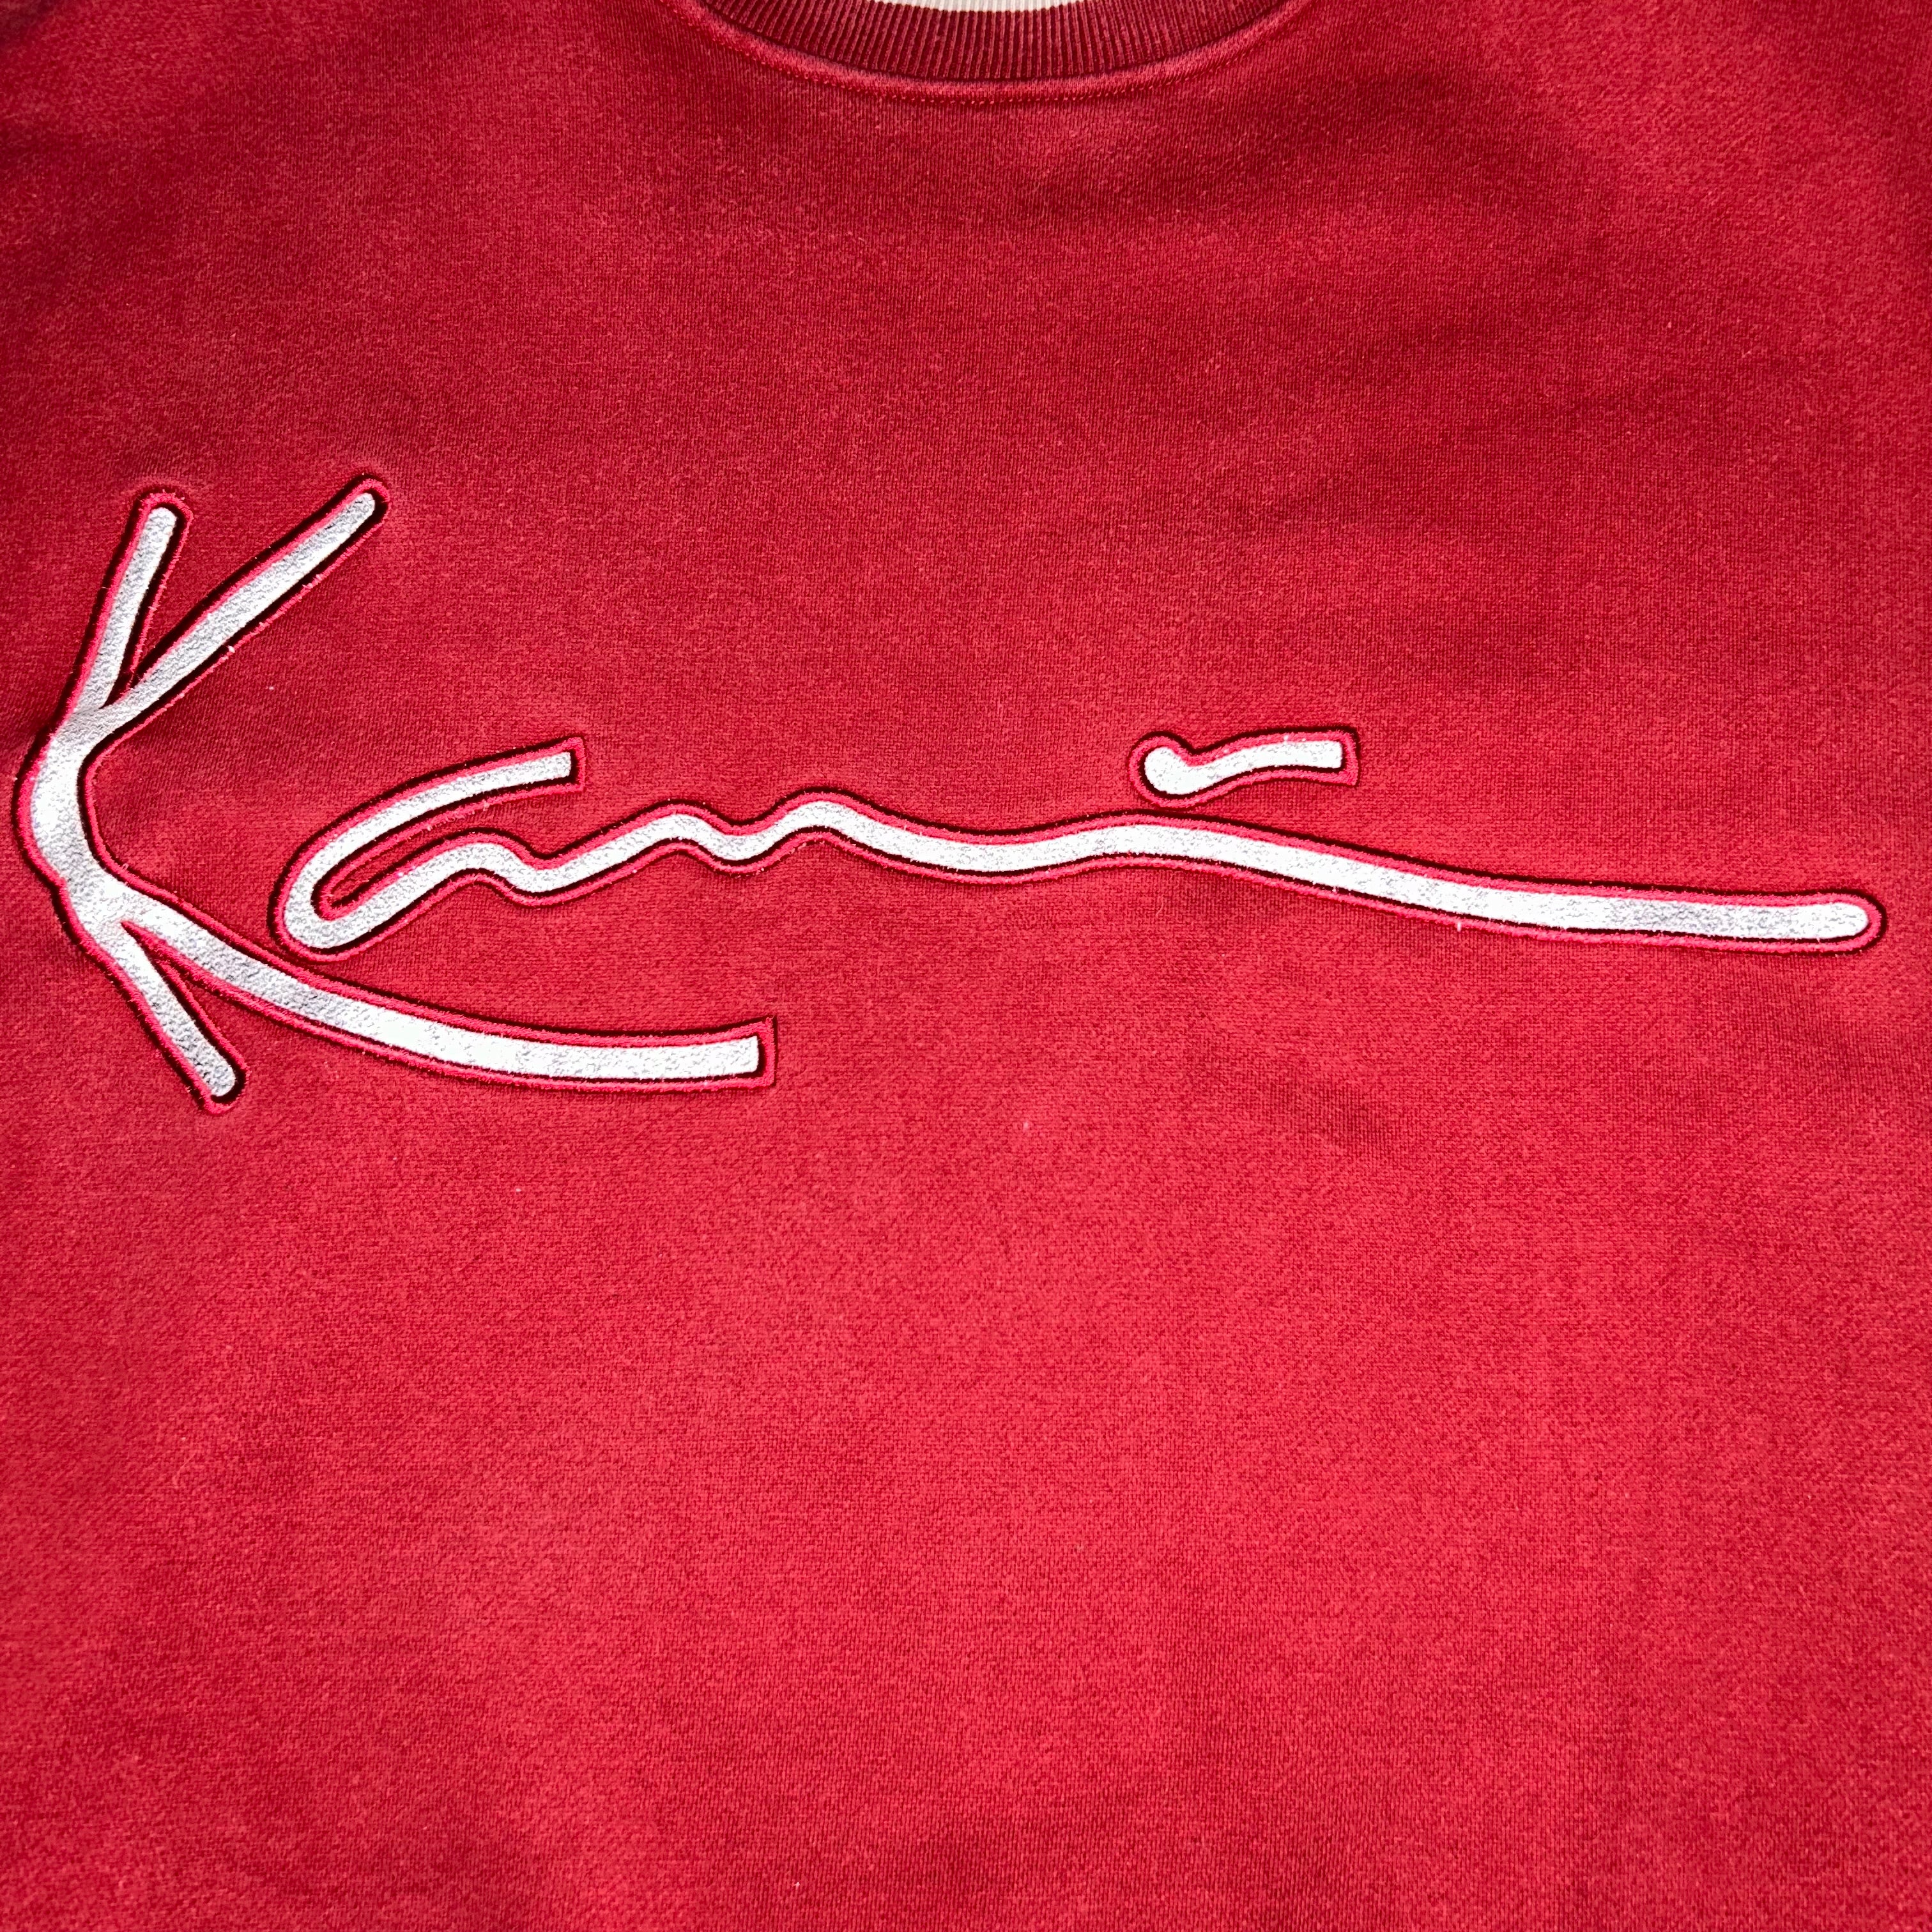 Vintage Karl Kani Sweatshirt (L/XL)